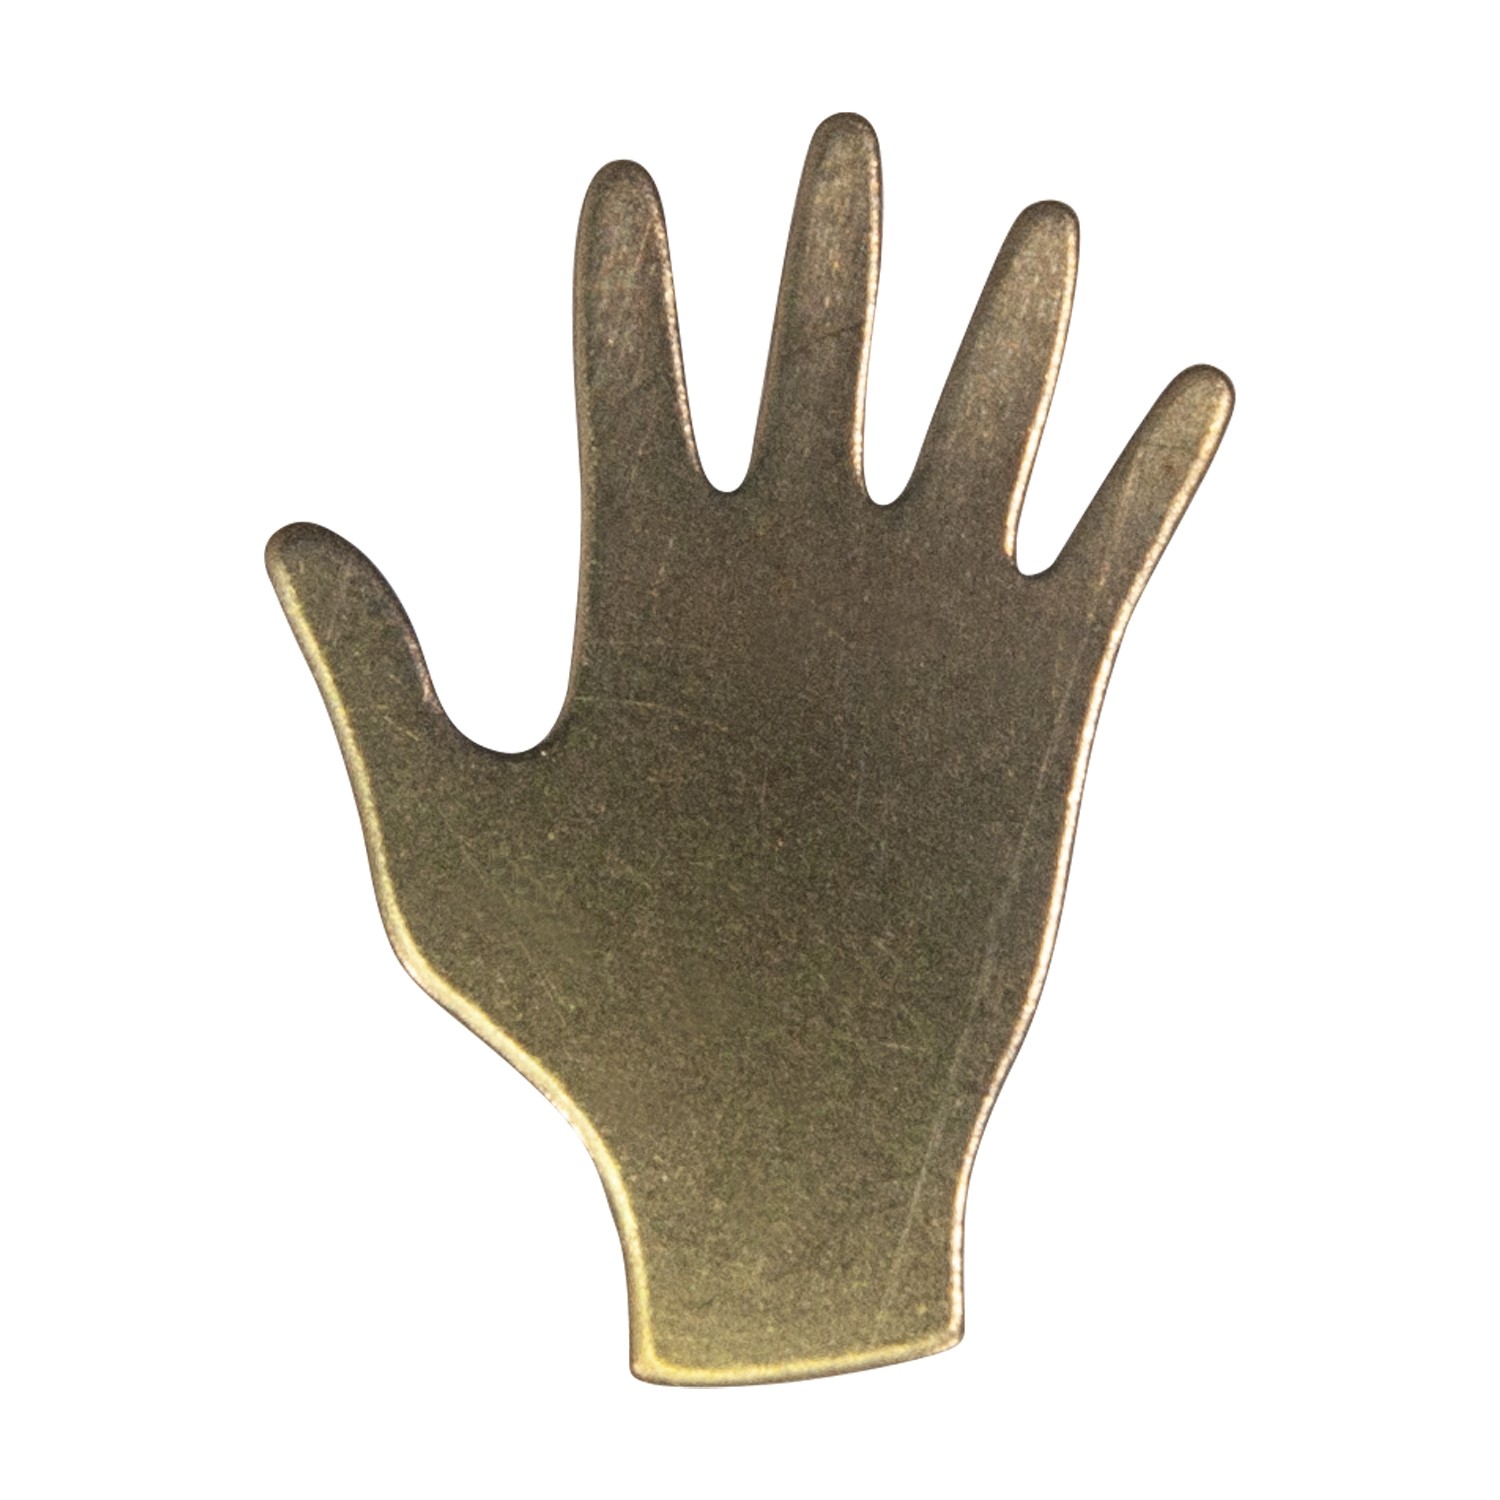 6/Pk of 24 Gauge Brass Hands - 3/4" x 7/8" Charm Blanks